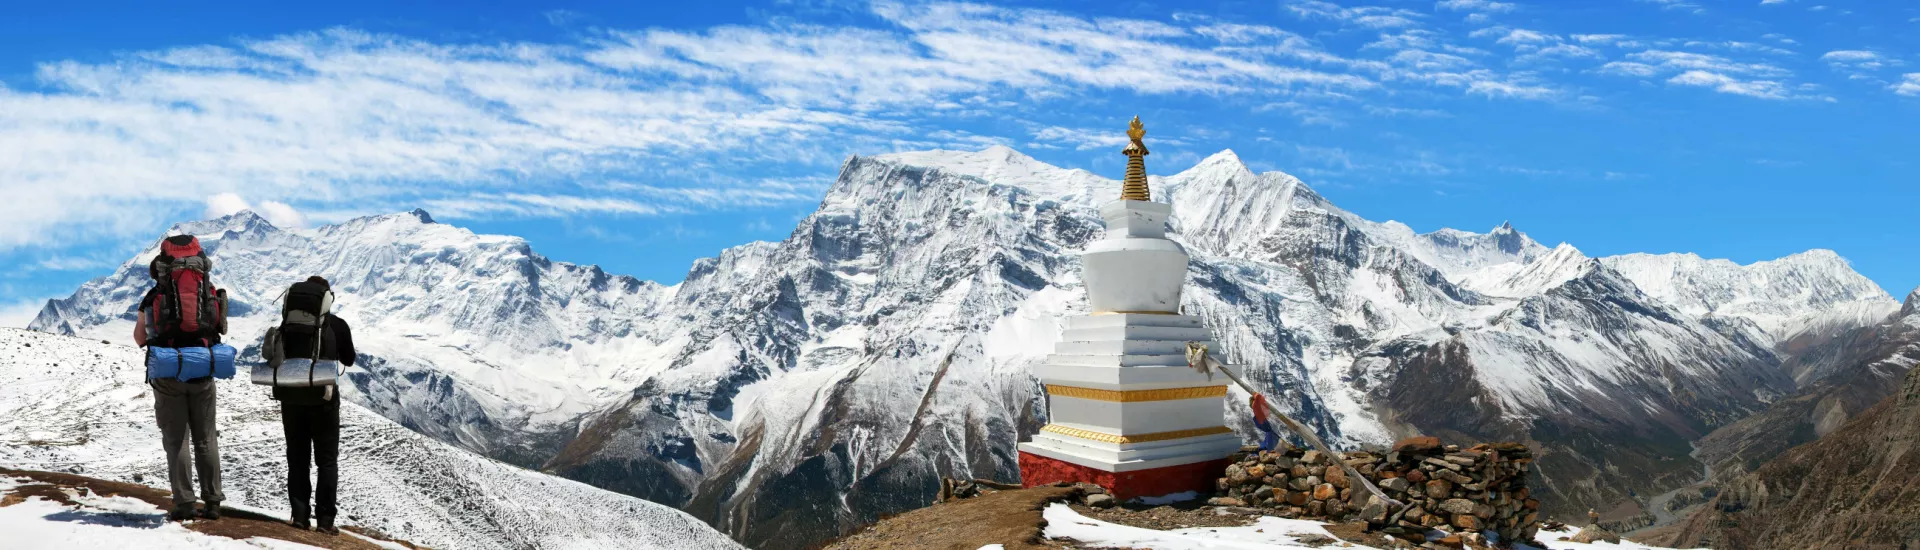  Annapurna mountain range